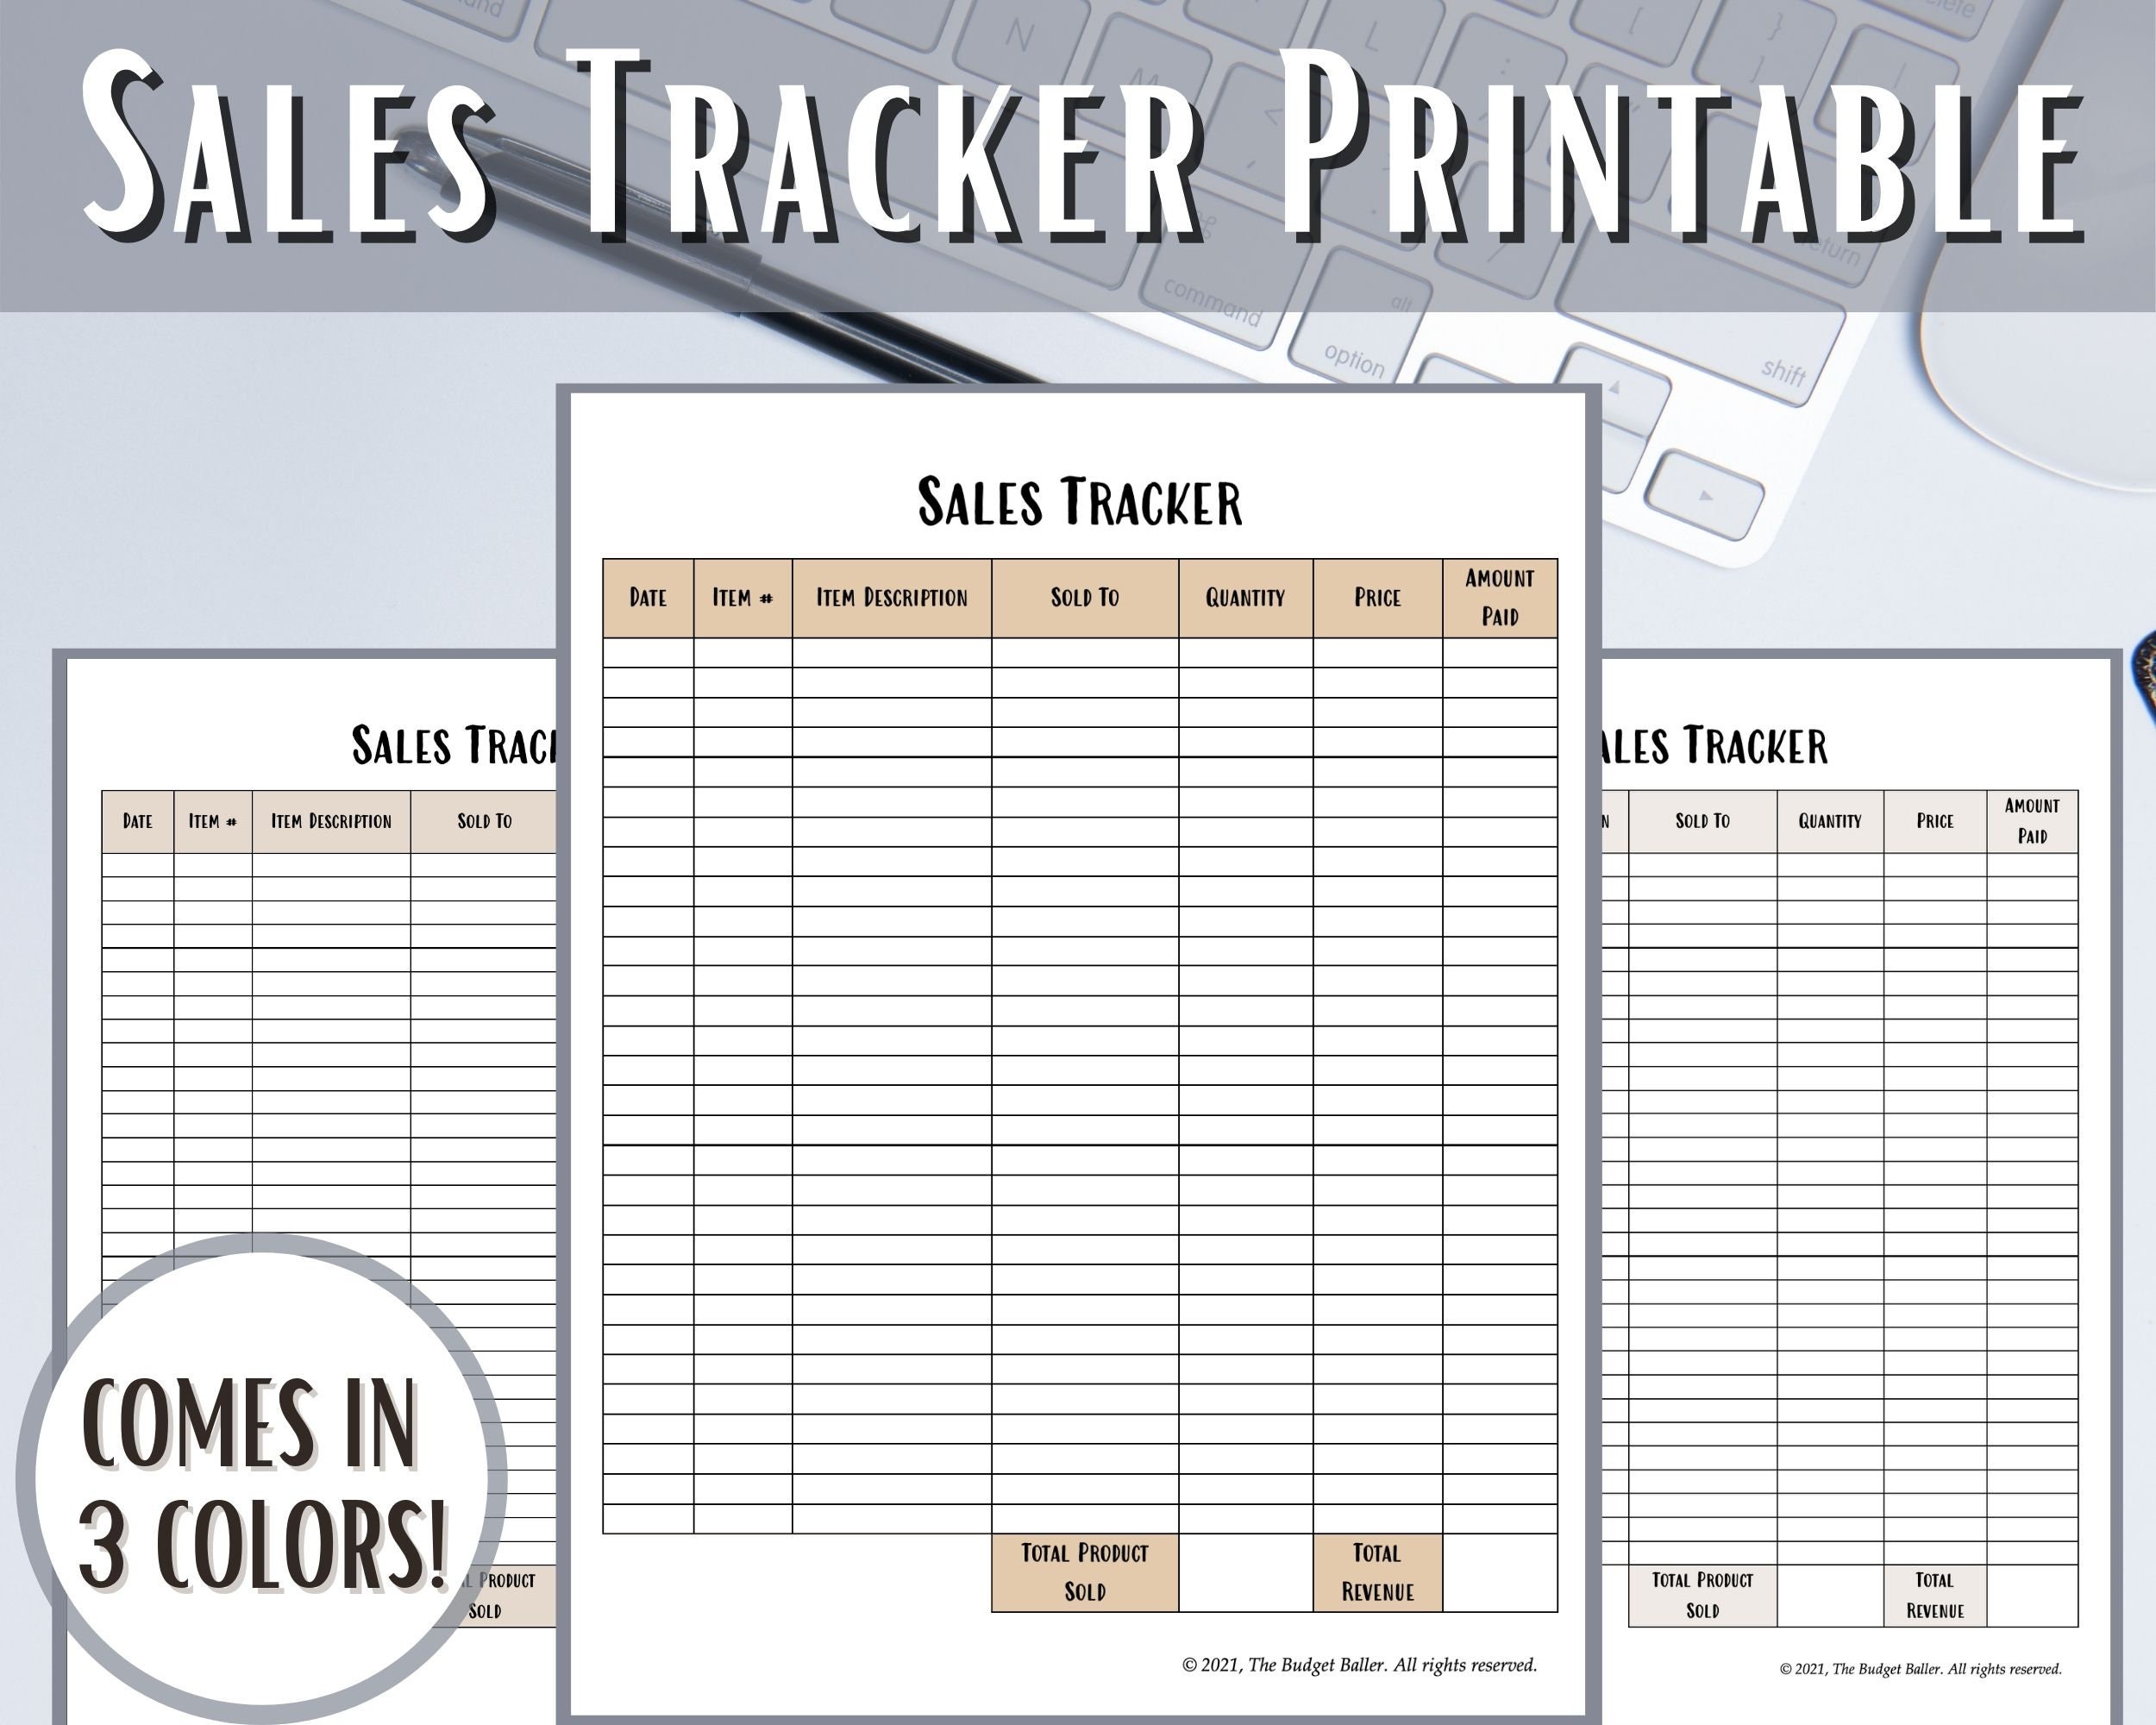 Sales Tracker Printable